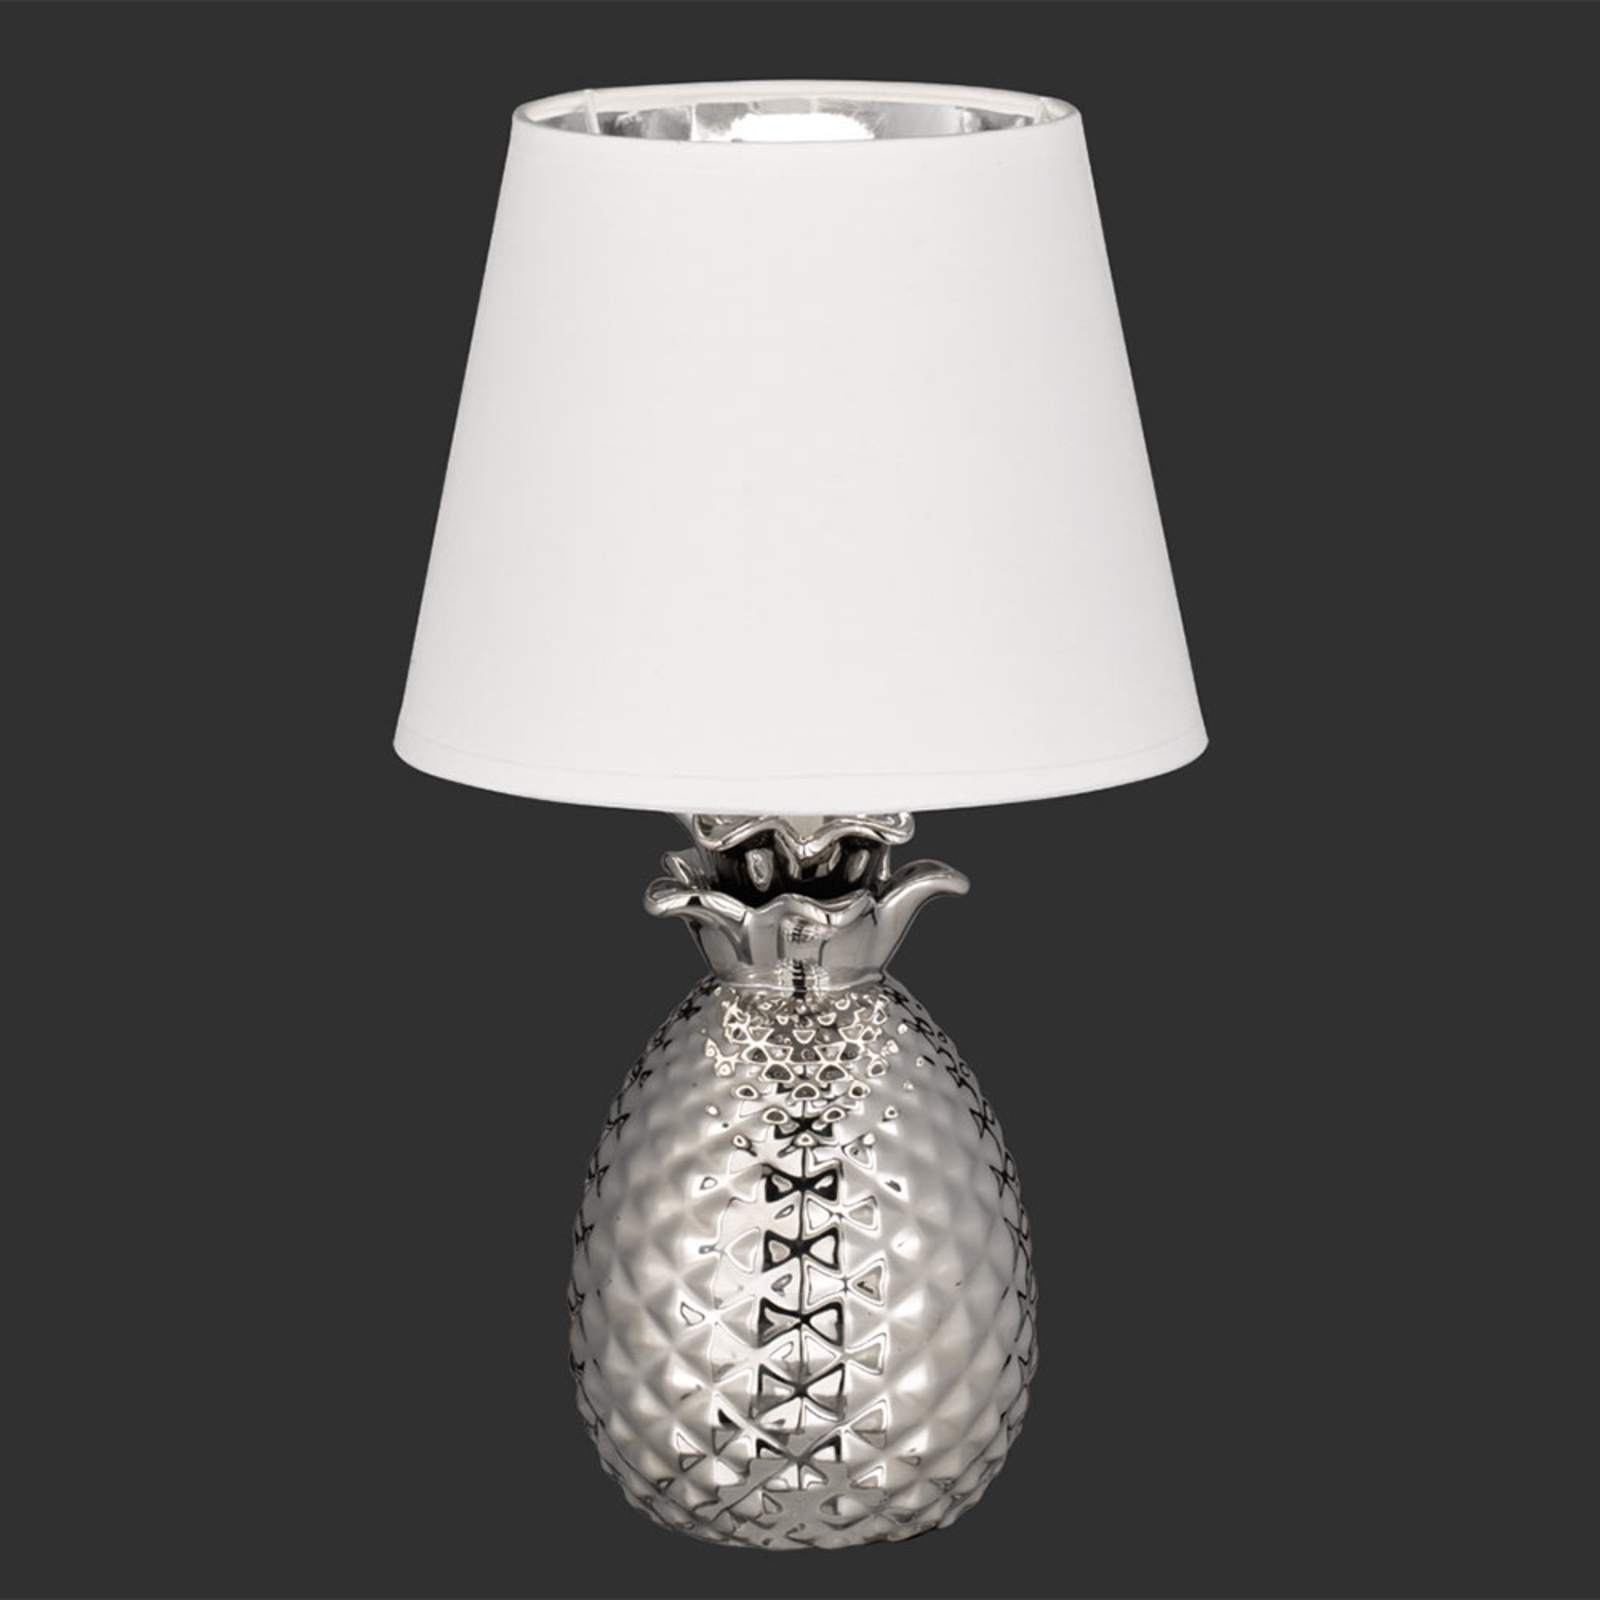 Decorative Pineapple ceramic table lamp, silver